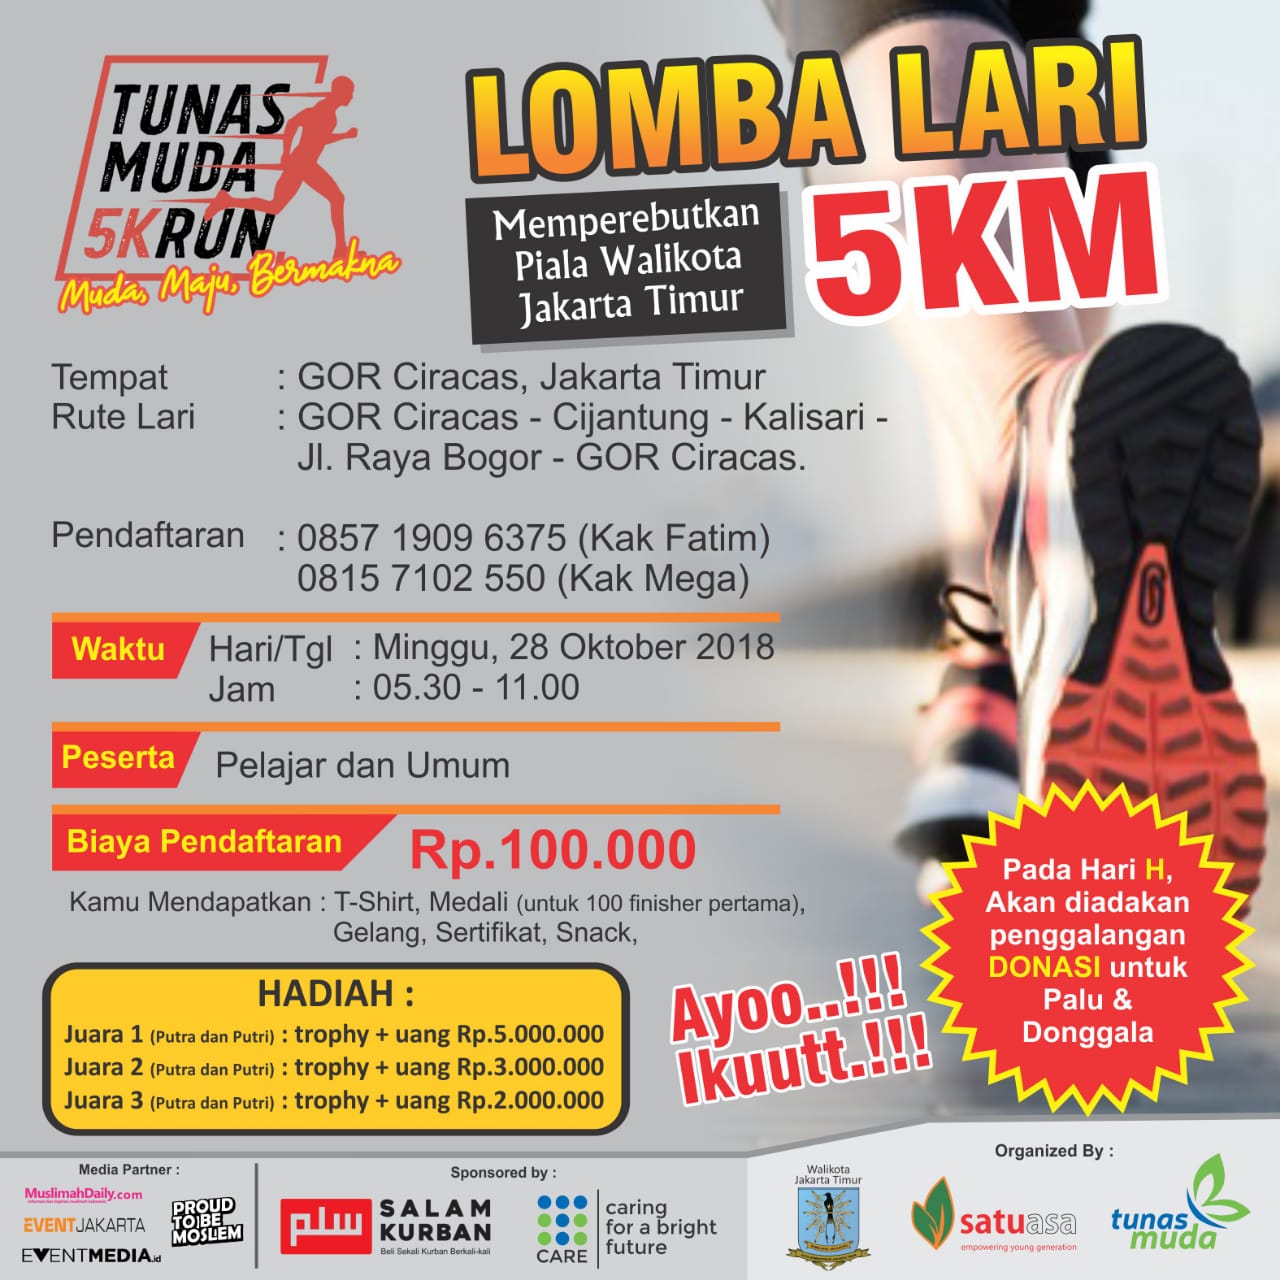 Lomba Lari 5 KM | Piala Walikota Jakarta Timur image 1